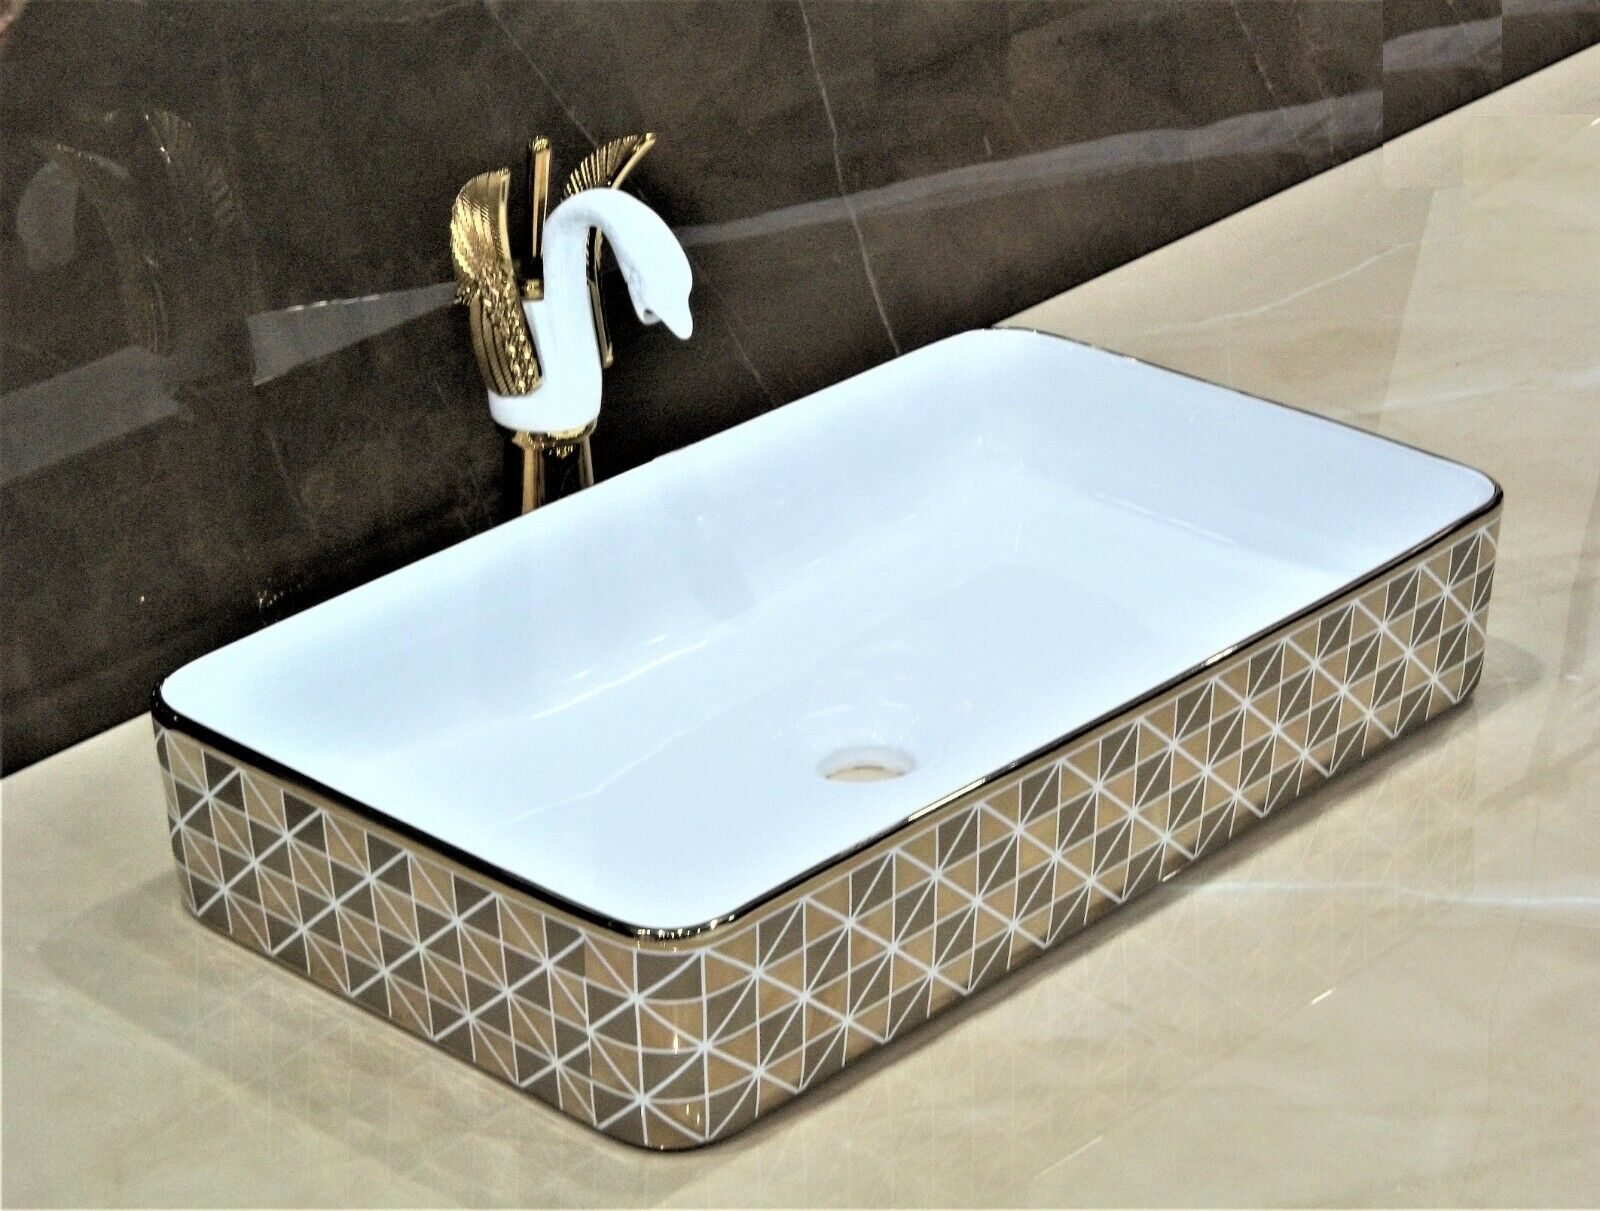 InArt Ceramic Rectangle Shape Above Counter Top Wash Basin Bathroom Porcelain Vessel Sink Bowl For Lavatory/Bathroom 63 x 36 x 12 CM (Gold White) - InArt-Studio-USA